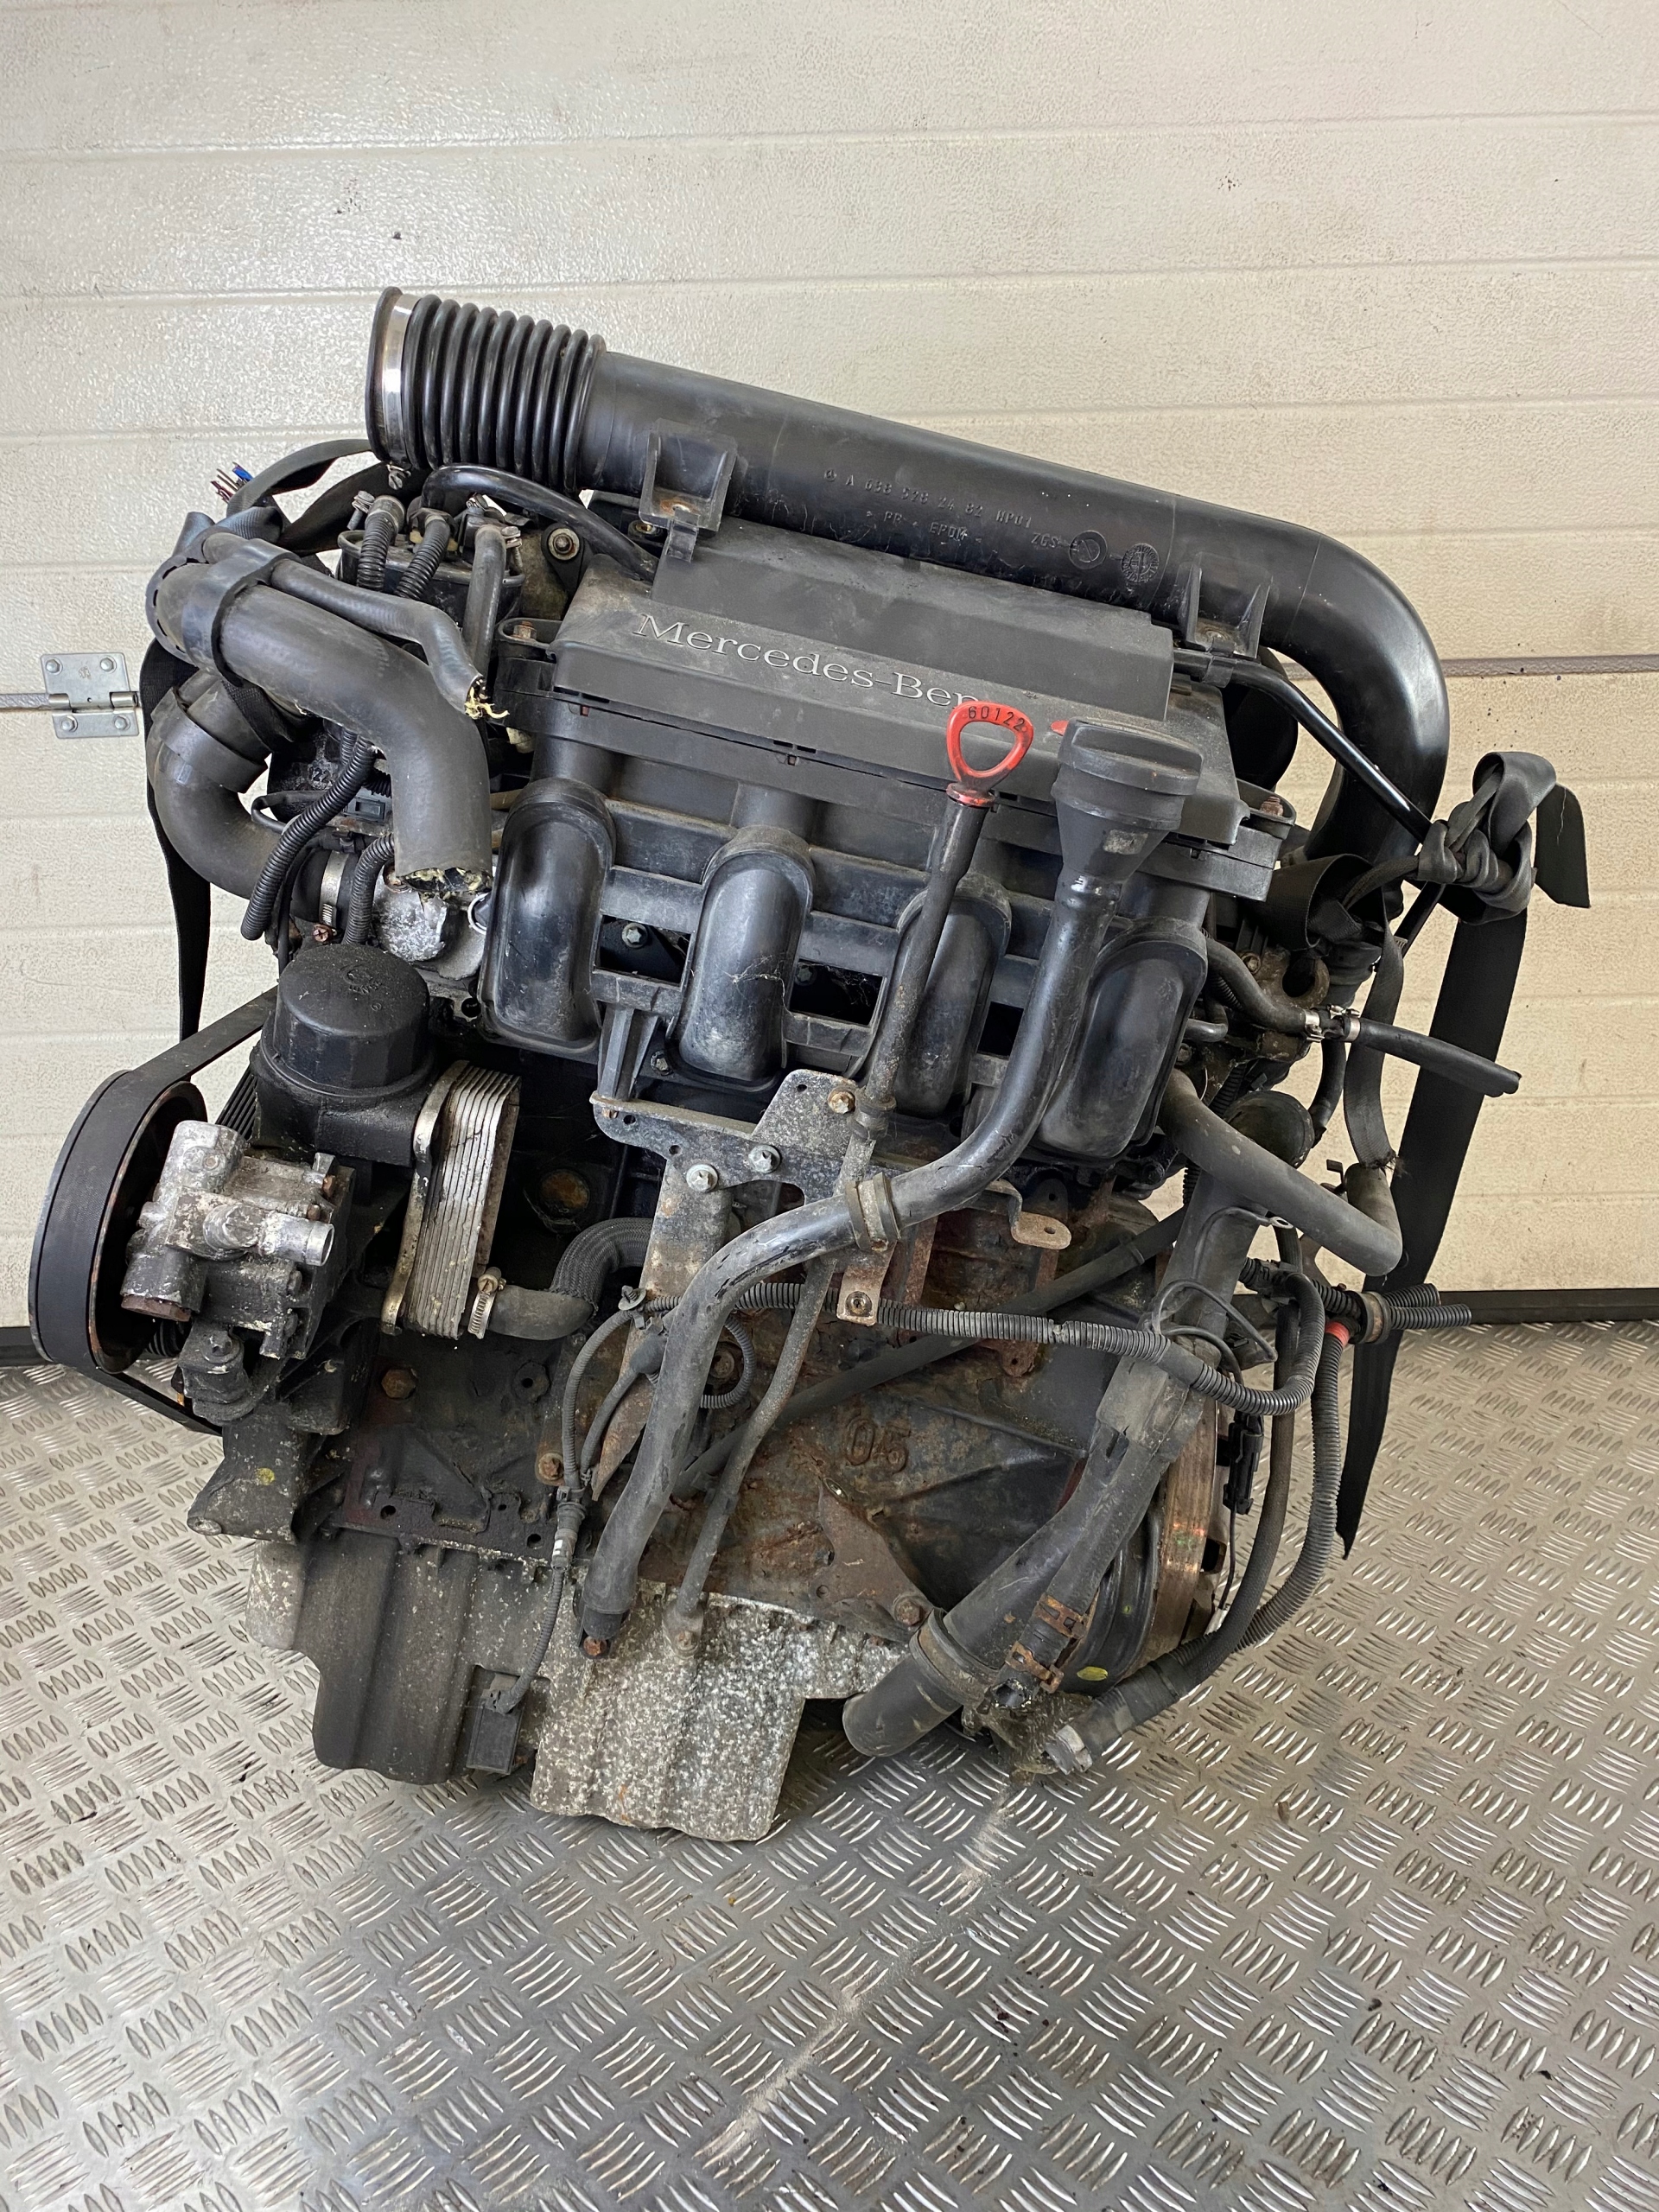 Vito двигатель. Двигатель Вито 638 2.2 CDI. Номер двигателя Вито 638 2.2 CDI. Мотор для Вито. W447 Vito 1.6 двигатель ресурс.